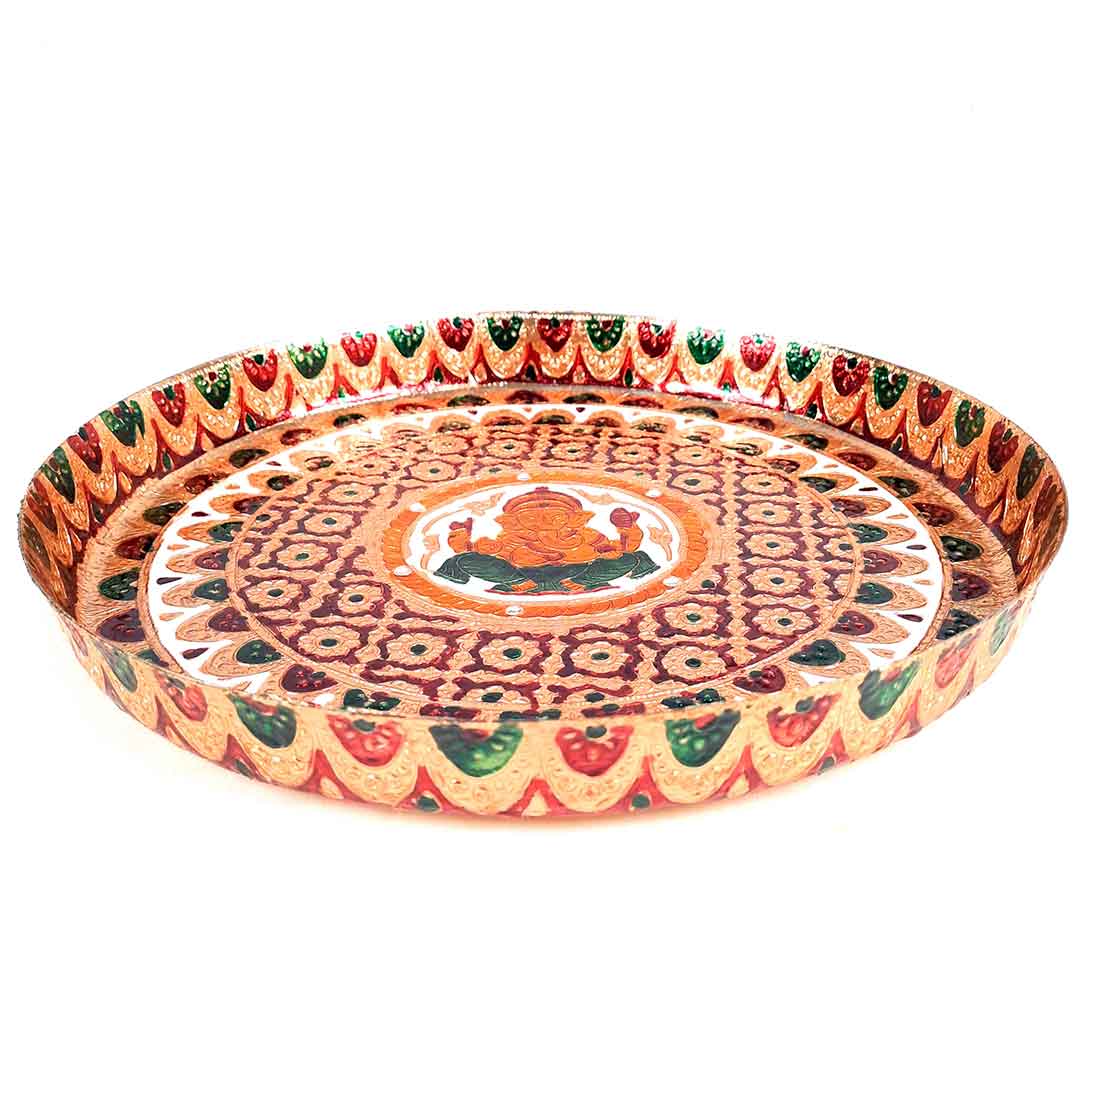 Pooja Plate | Aarti Thali - Ganesha Ji Design - For Pooja, Weddings & Festivals - 13 Inch - ApkaMart